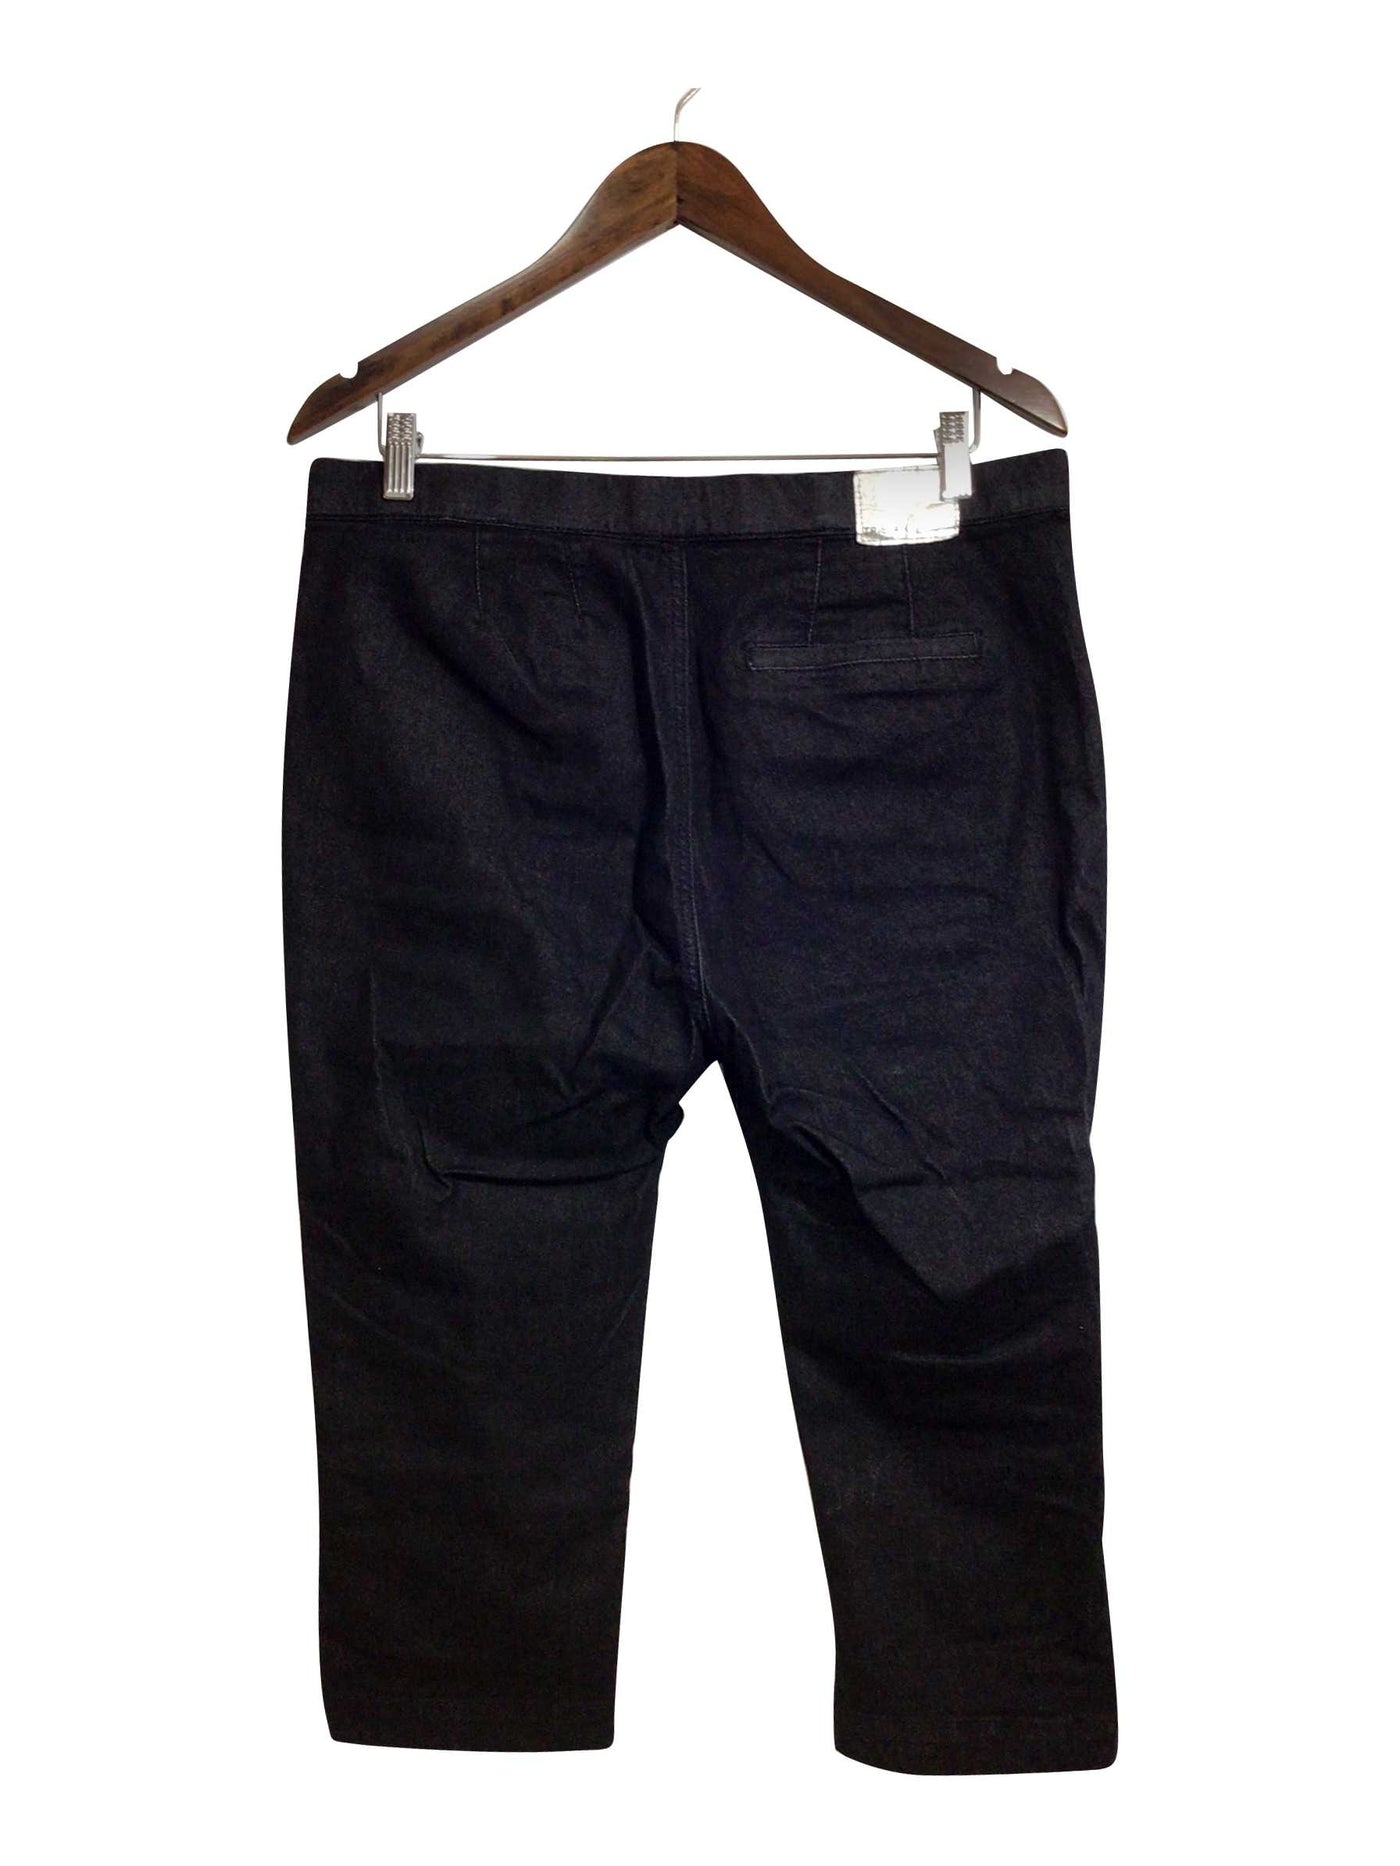 TRISTAN Regular fit Straight-legged Jeans in Black - Size M | 15 $ KOOP